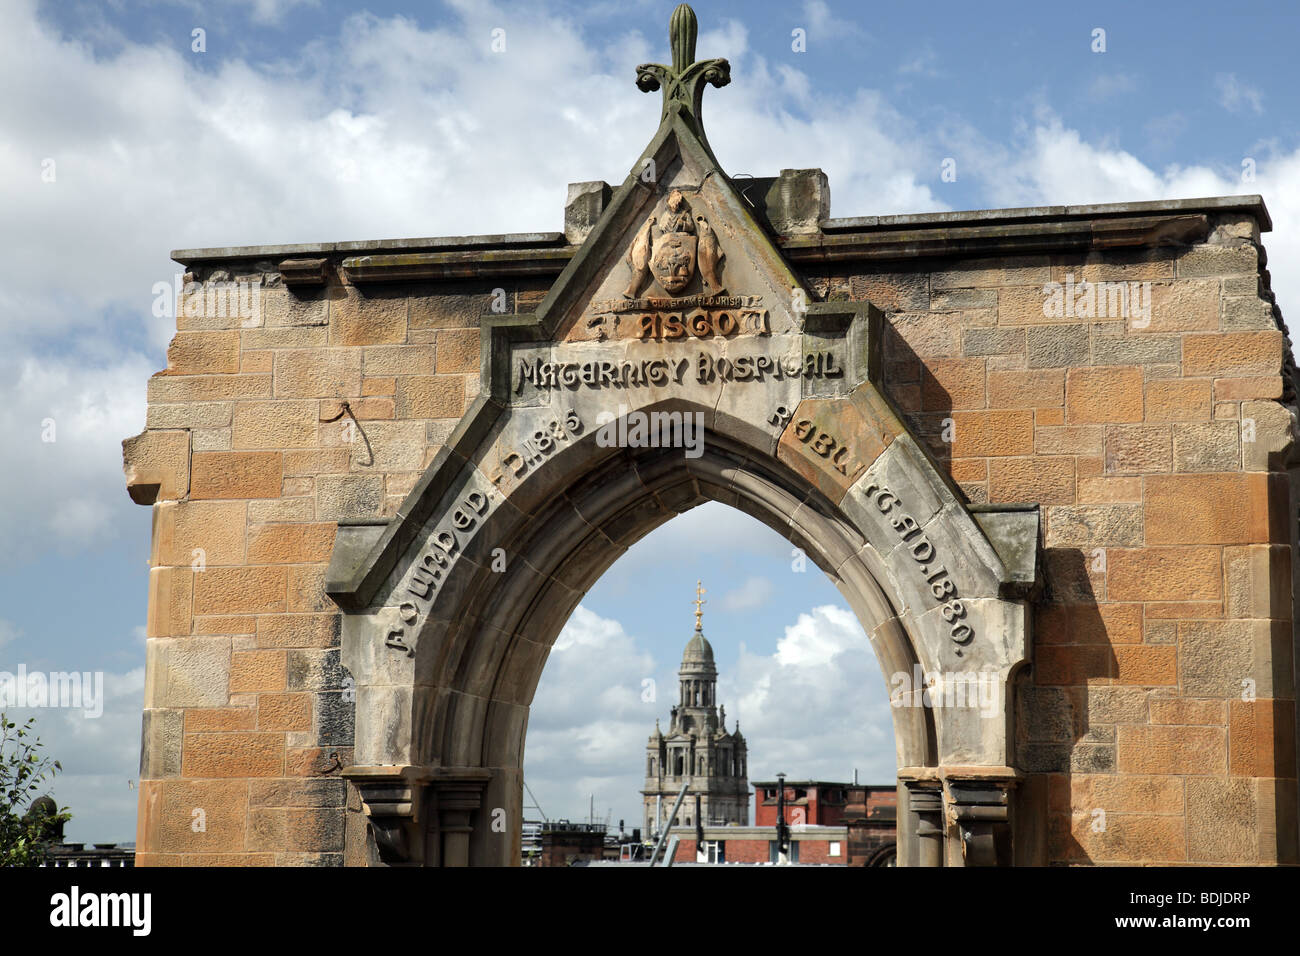 Dome of the City Chambers durch den Rottenrow Arch, Glasgow, Schottland, Großbritannien Stockfoto